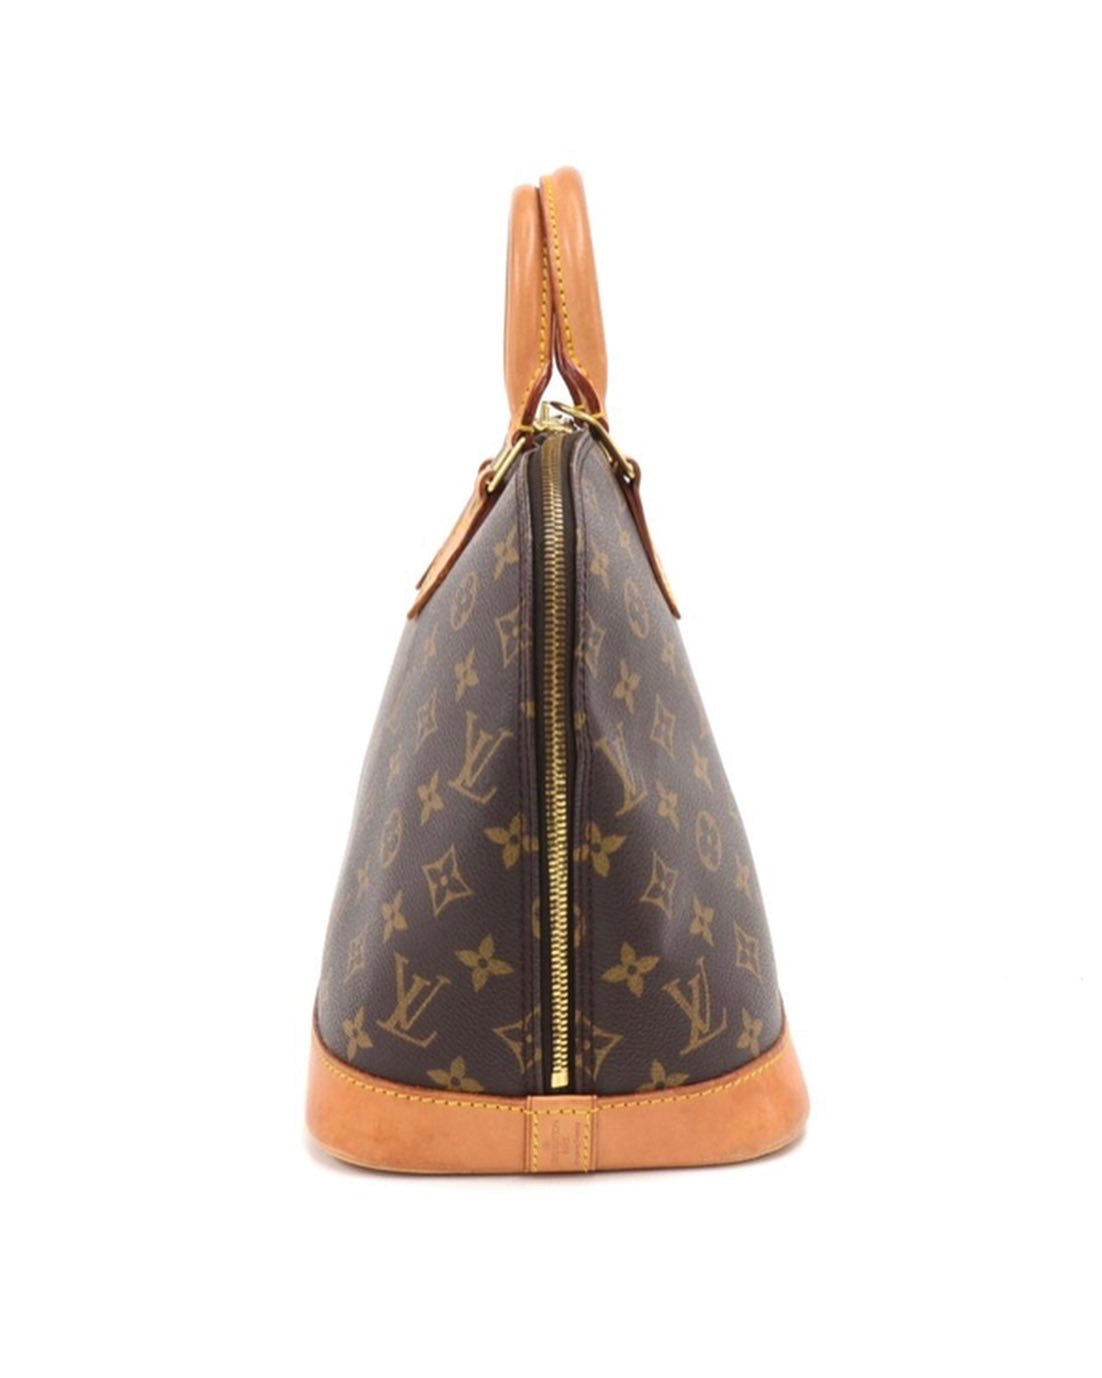 Luois Vuitton Alma Vintage Monogram Handbag Brown